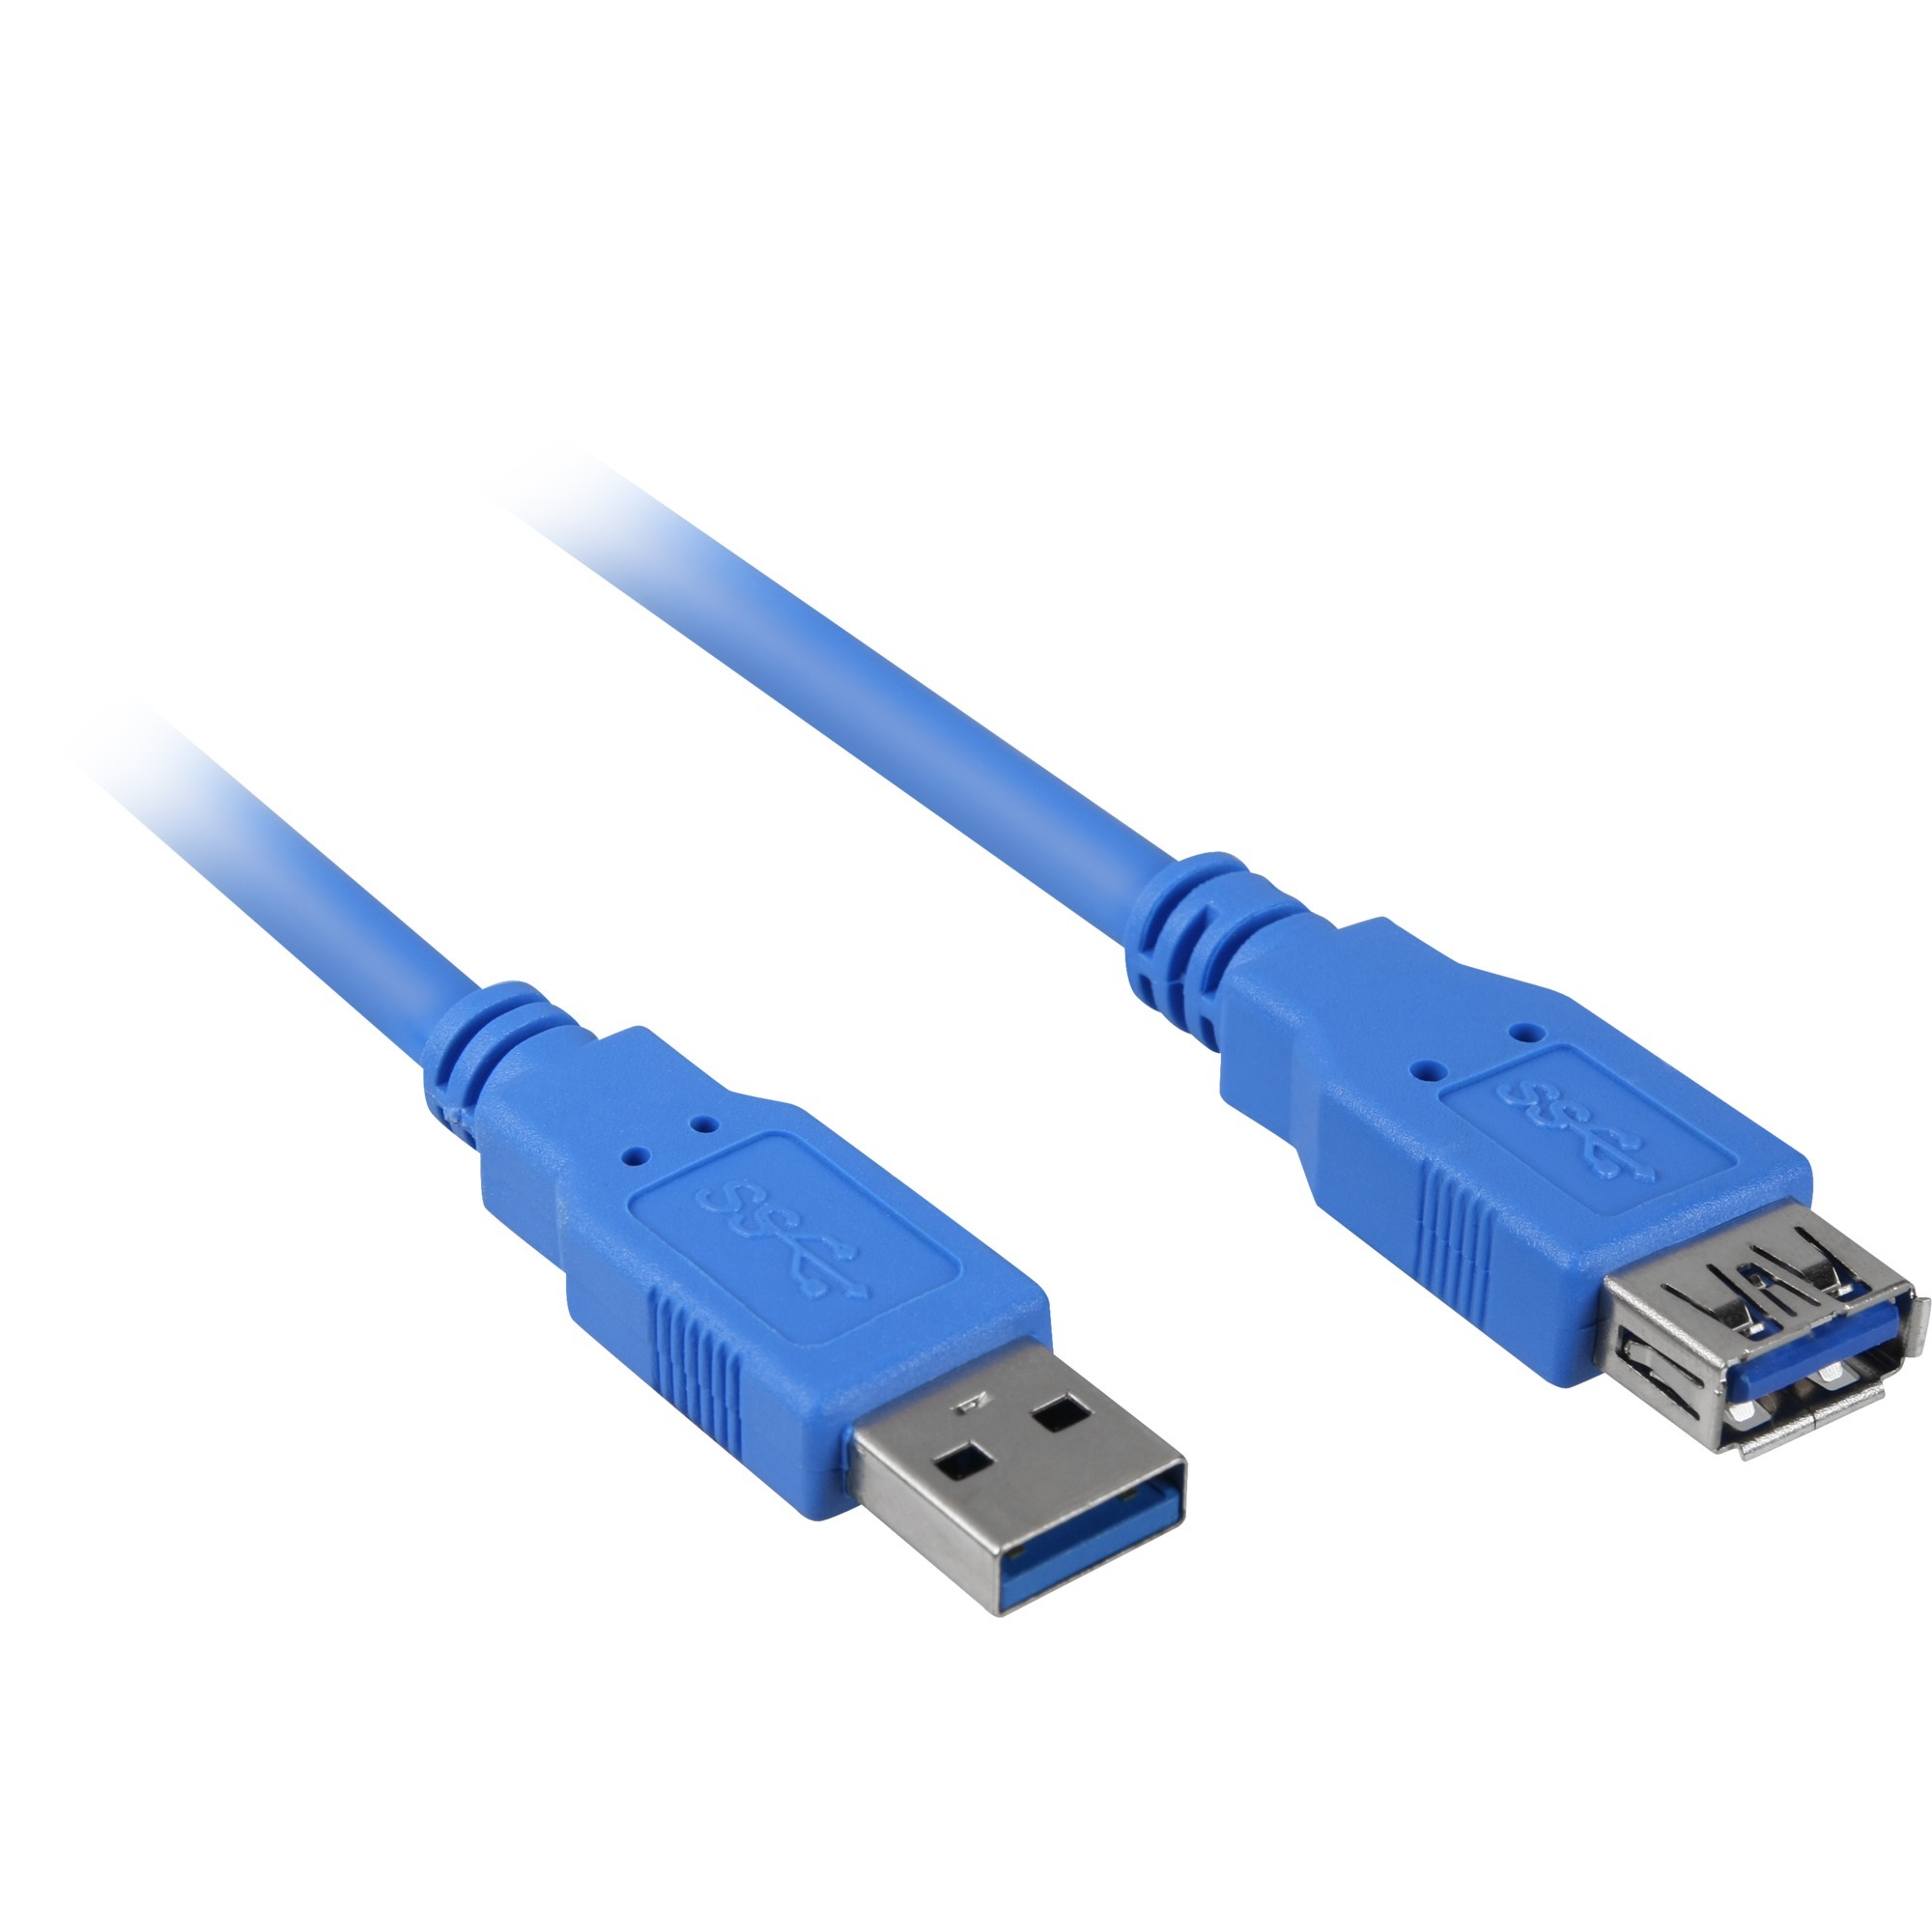 Image of Alternate - Kabel USB 3.0-Verlängerung, Verlängerungskabel online einkaufen bei Alternate